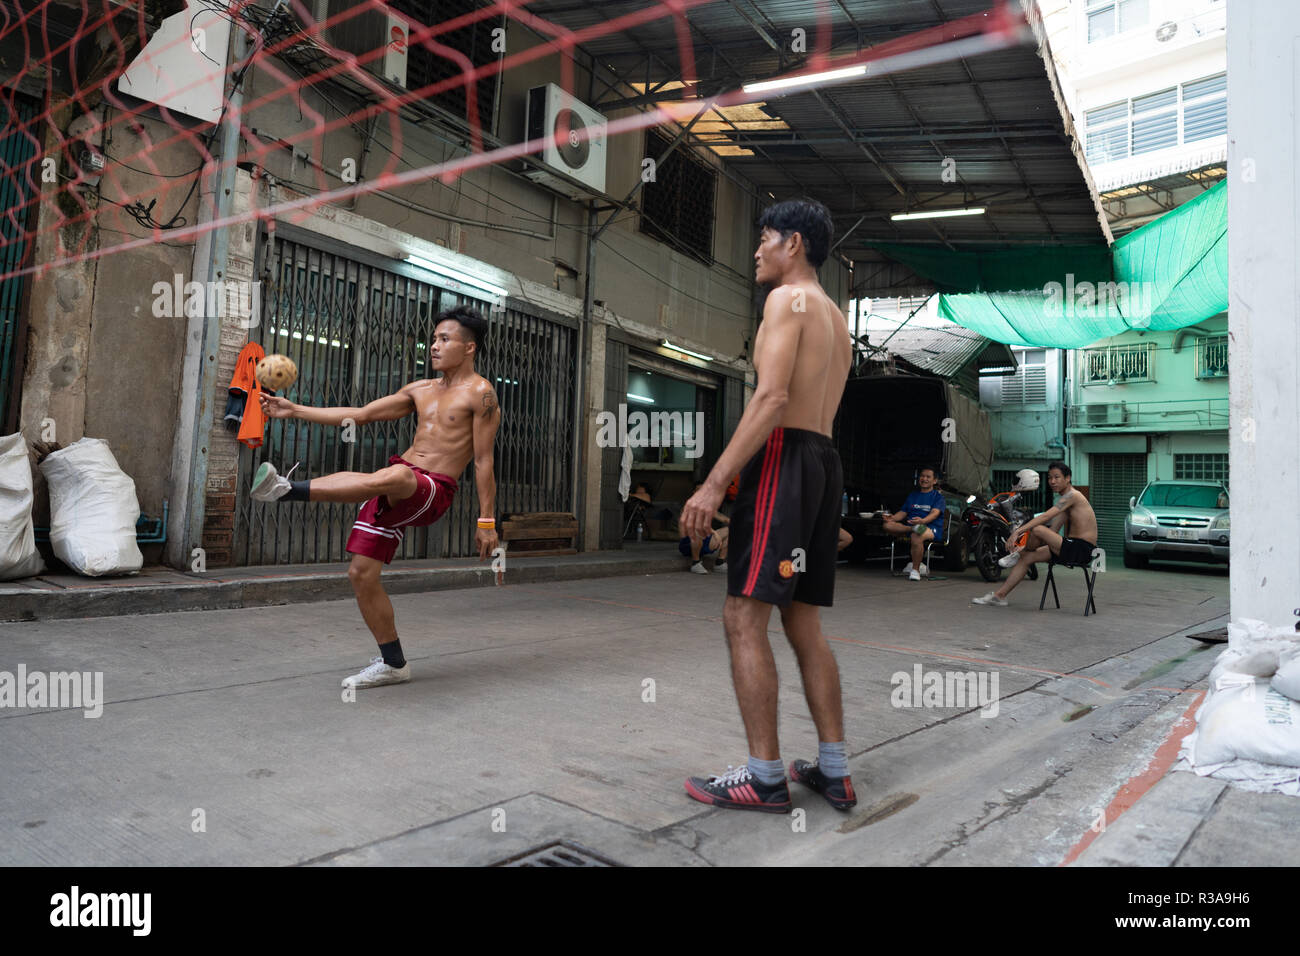 Men seen playing Sepak takraw or foot volleyball in Chinatown, Bangkok, Thailand. Daily life in Bangkok capital of Thailand. Stock Photo